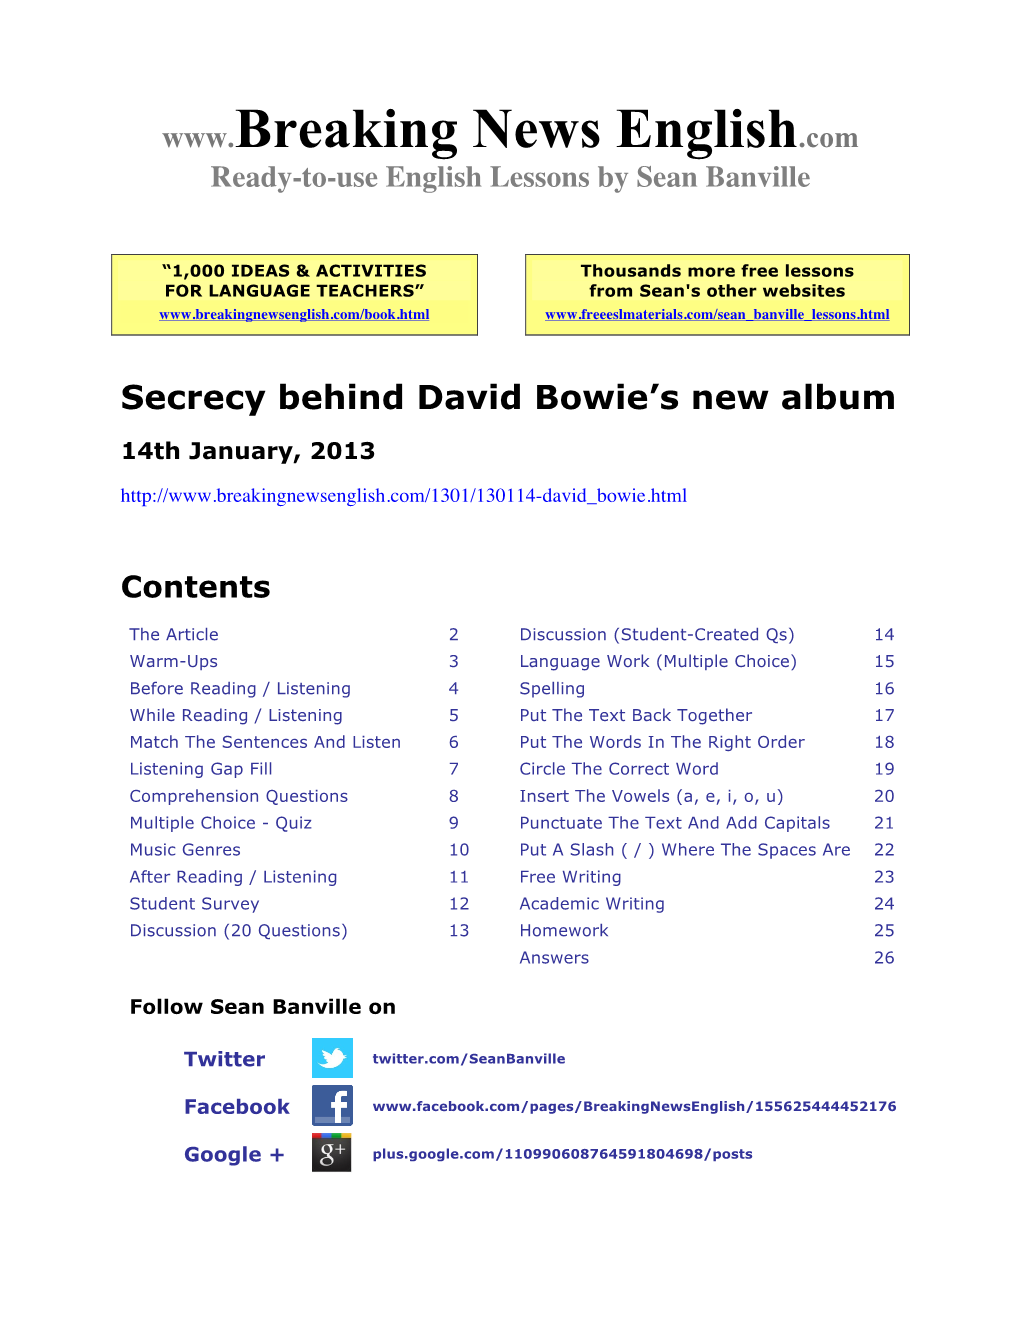 Secrecy Behind David Bowie's New Album